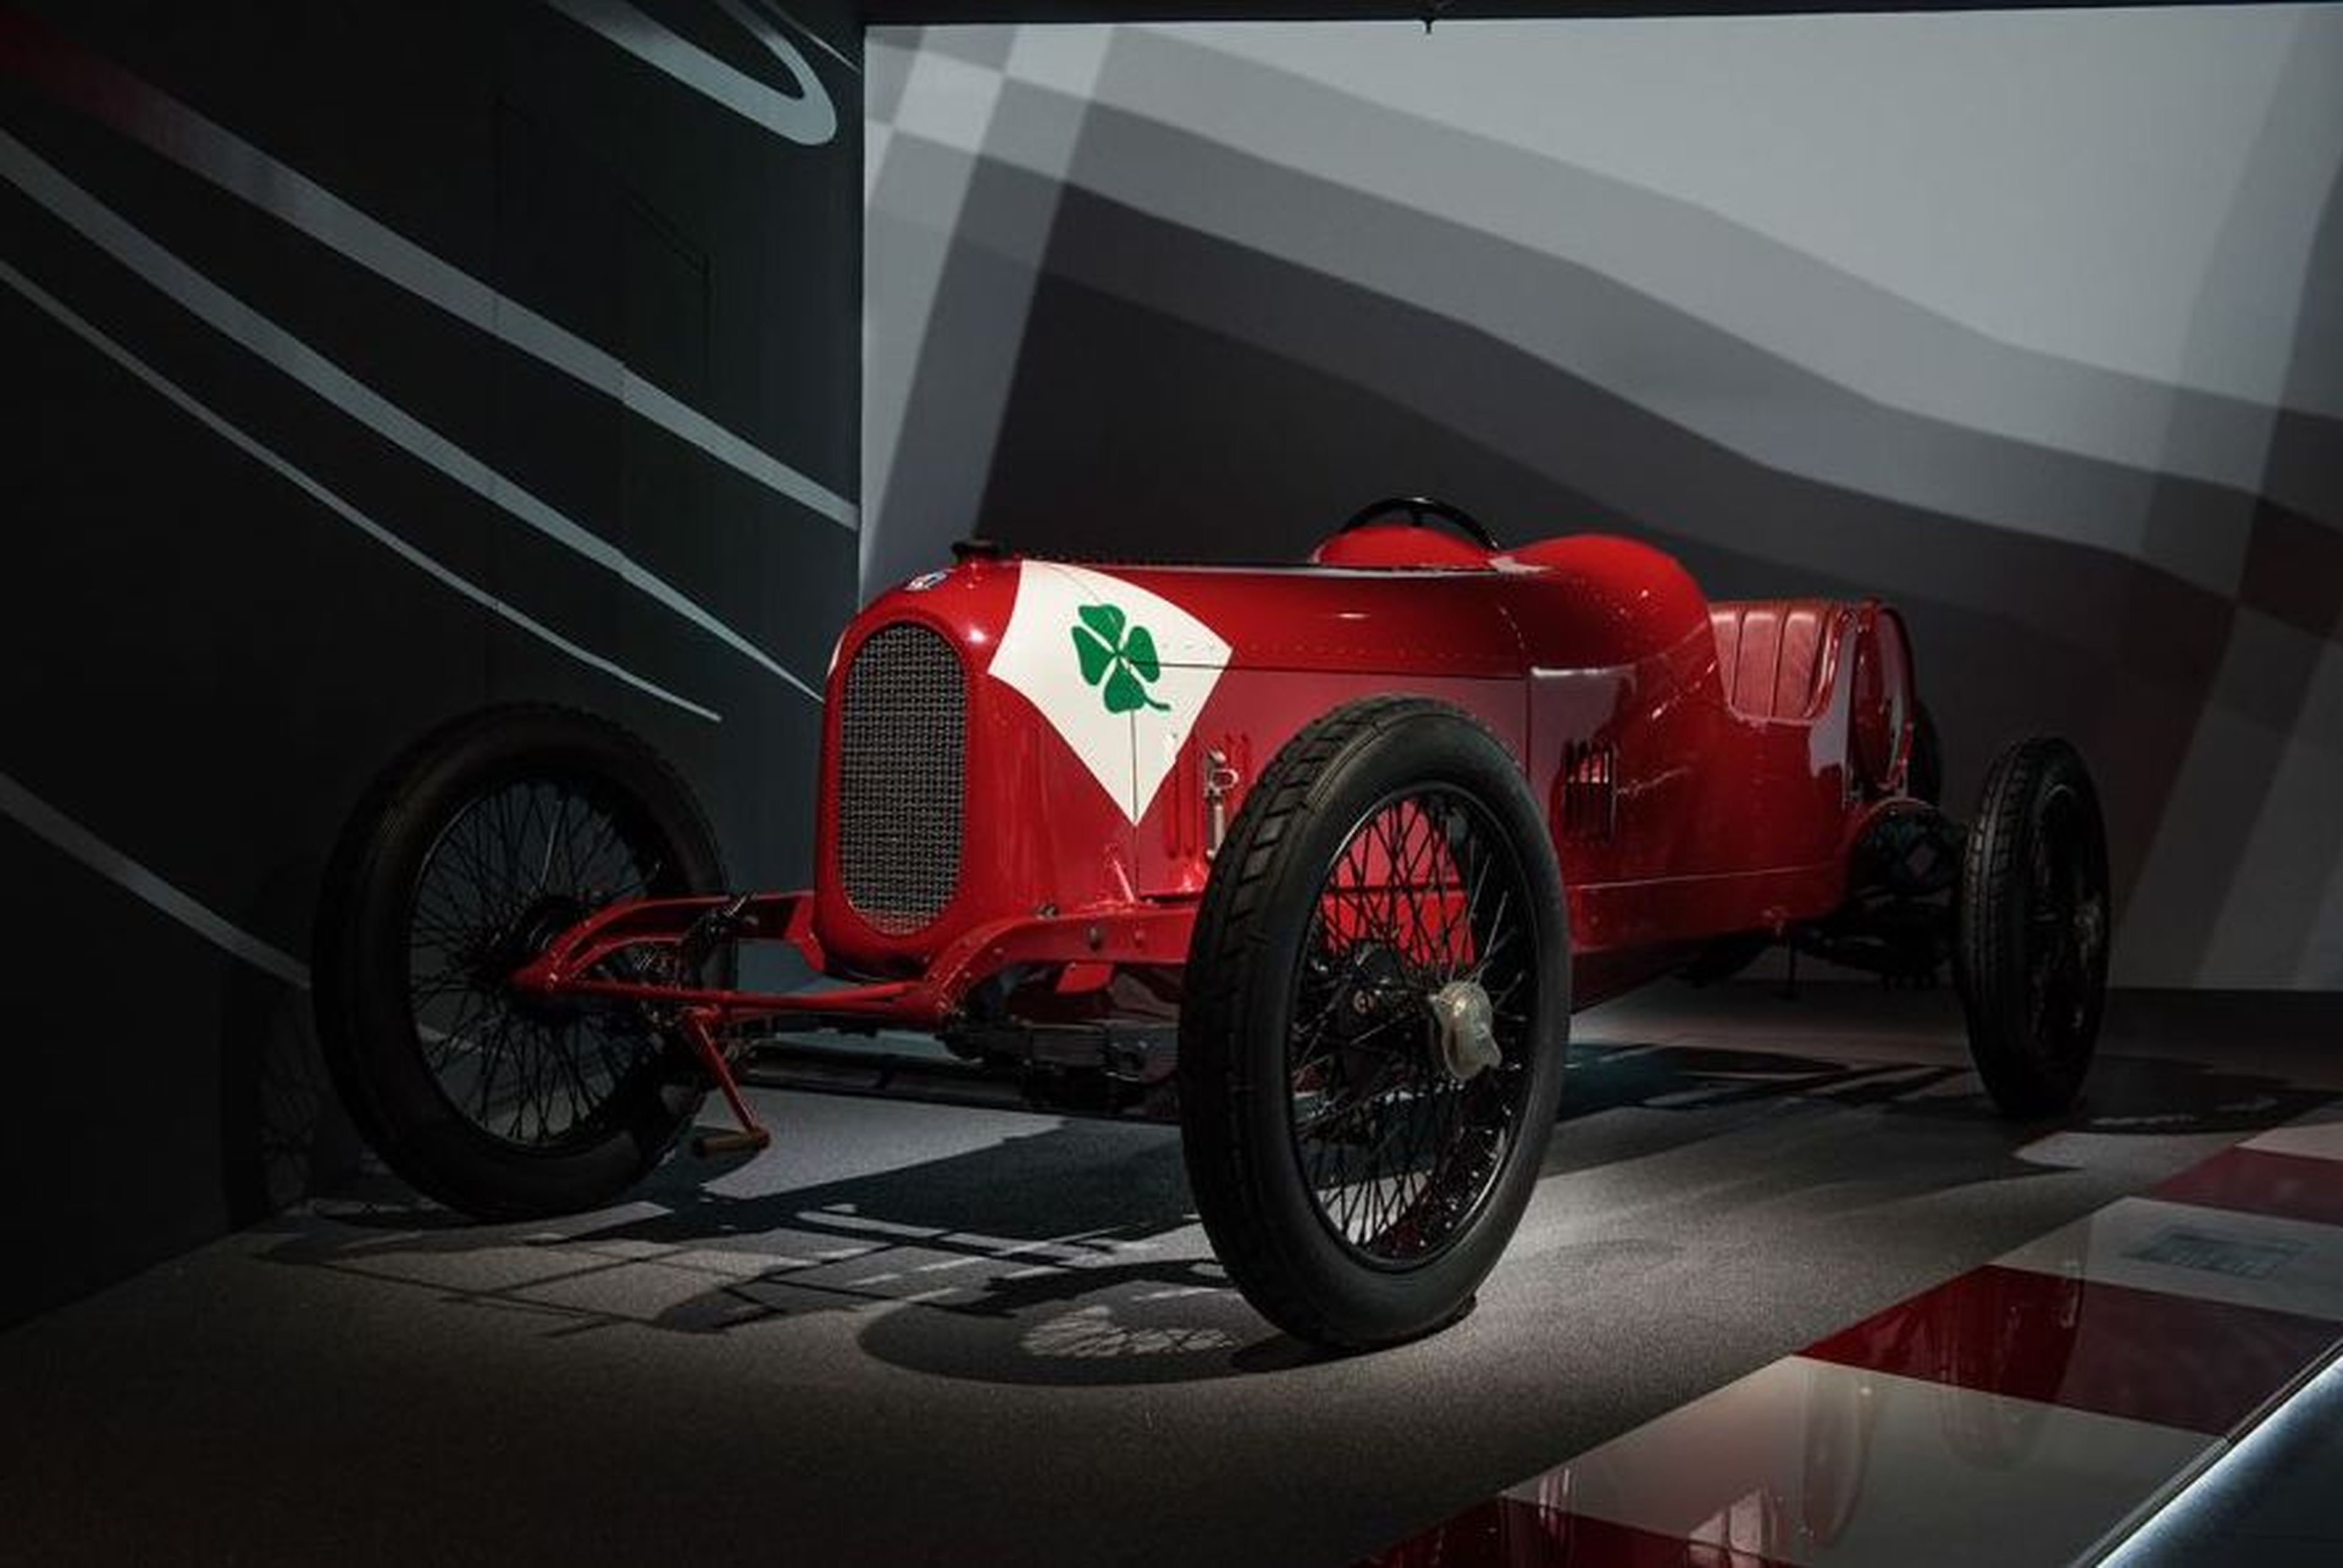 El Alfa Romeo pilotado por Ugo Sivocci para ahuyentar la mala suerte en la carrera Targa Florio de 1923.